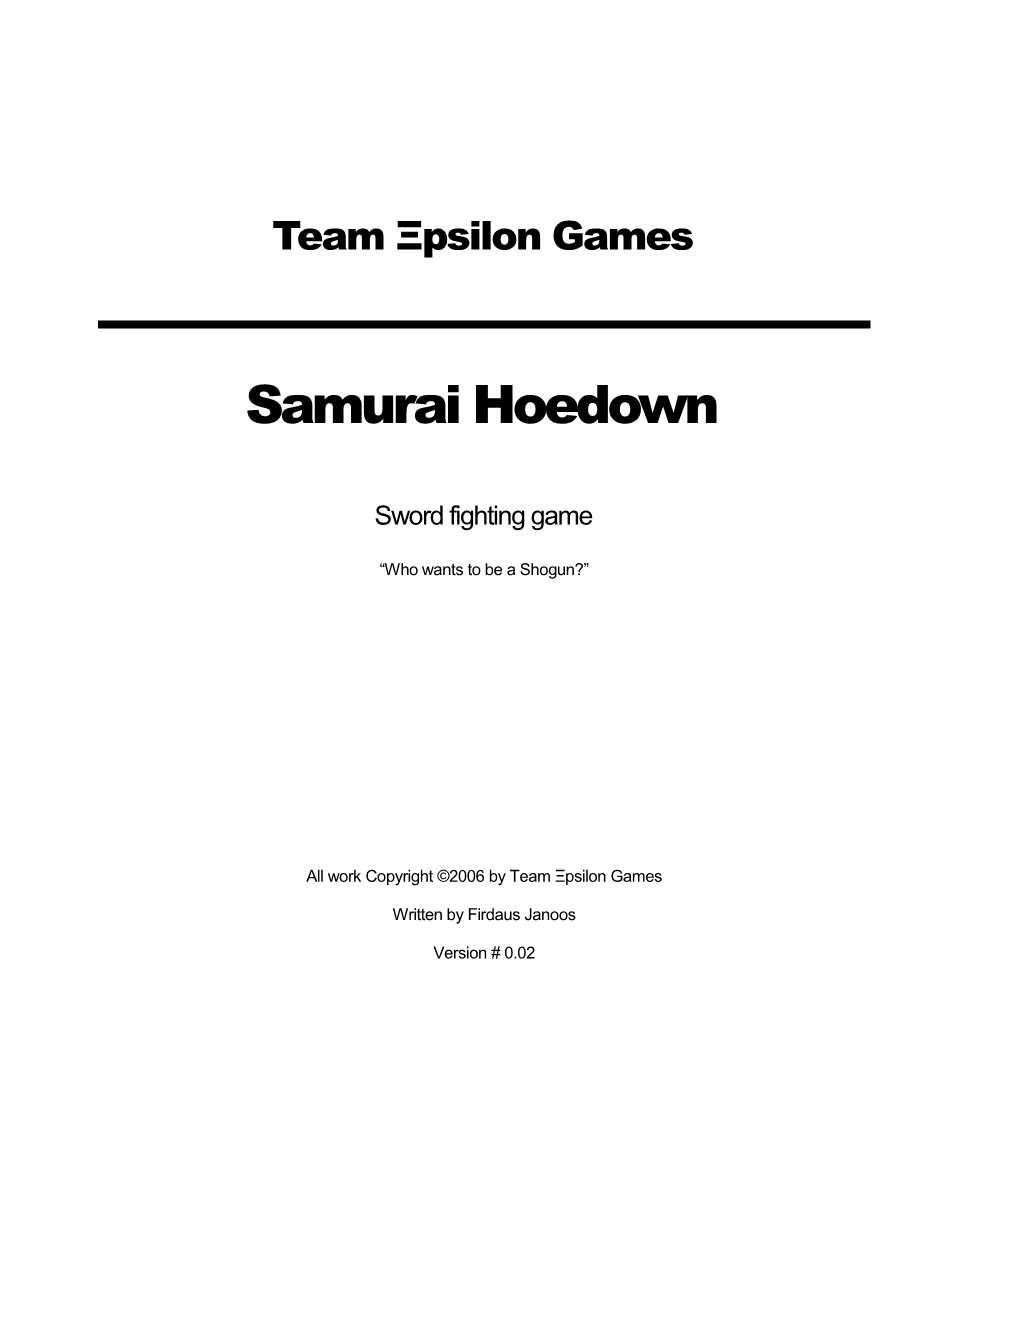 Copyright (C) 2006 Team Ξpsilon Games All Rights Reserved Samurai Hoedown!